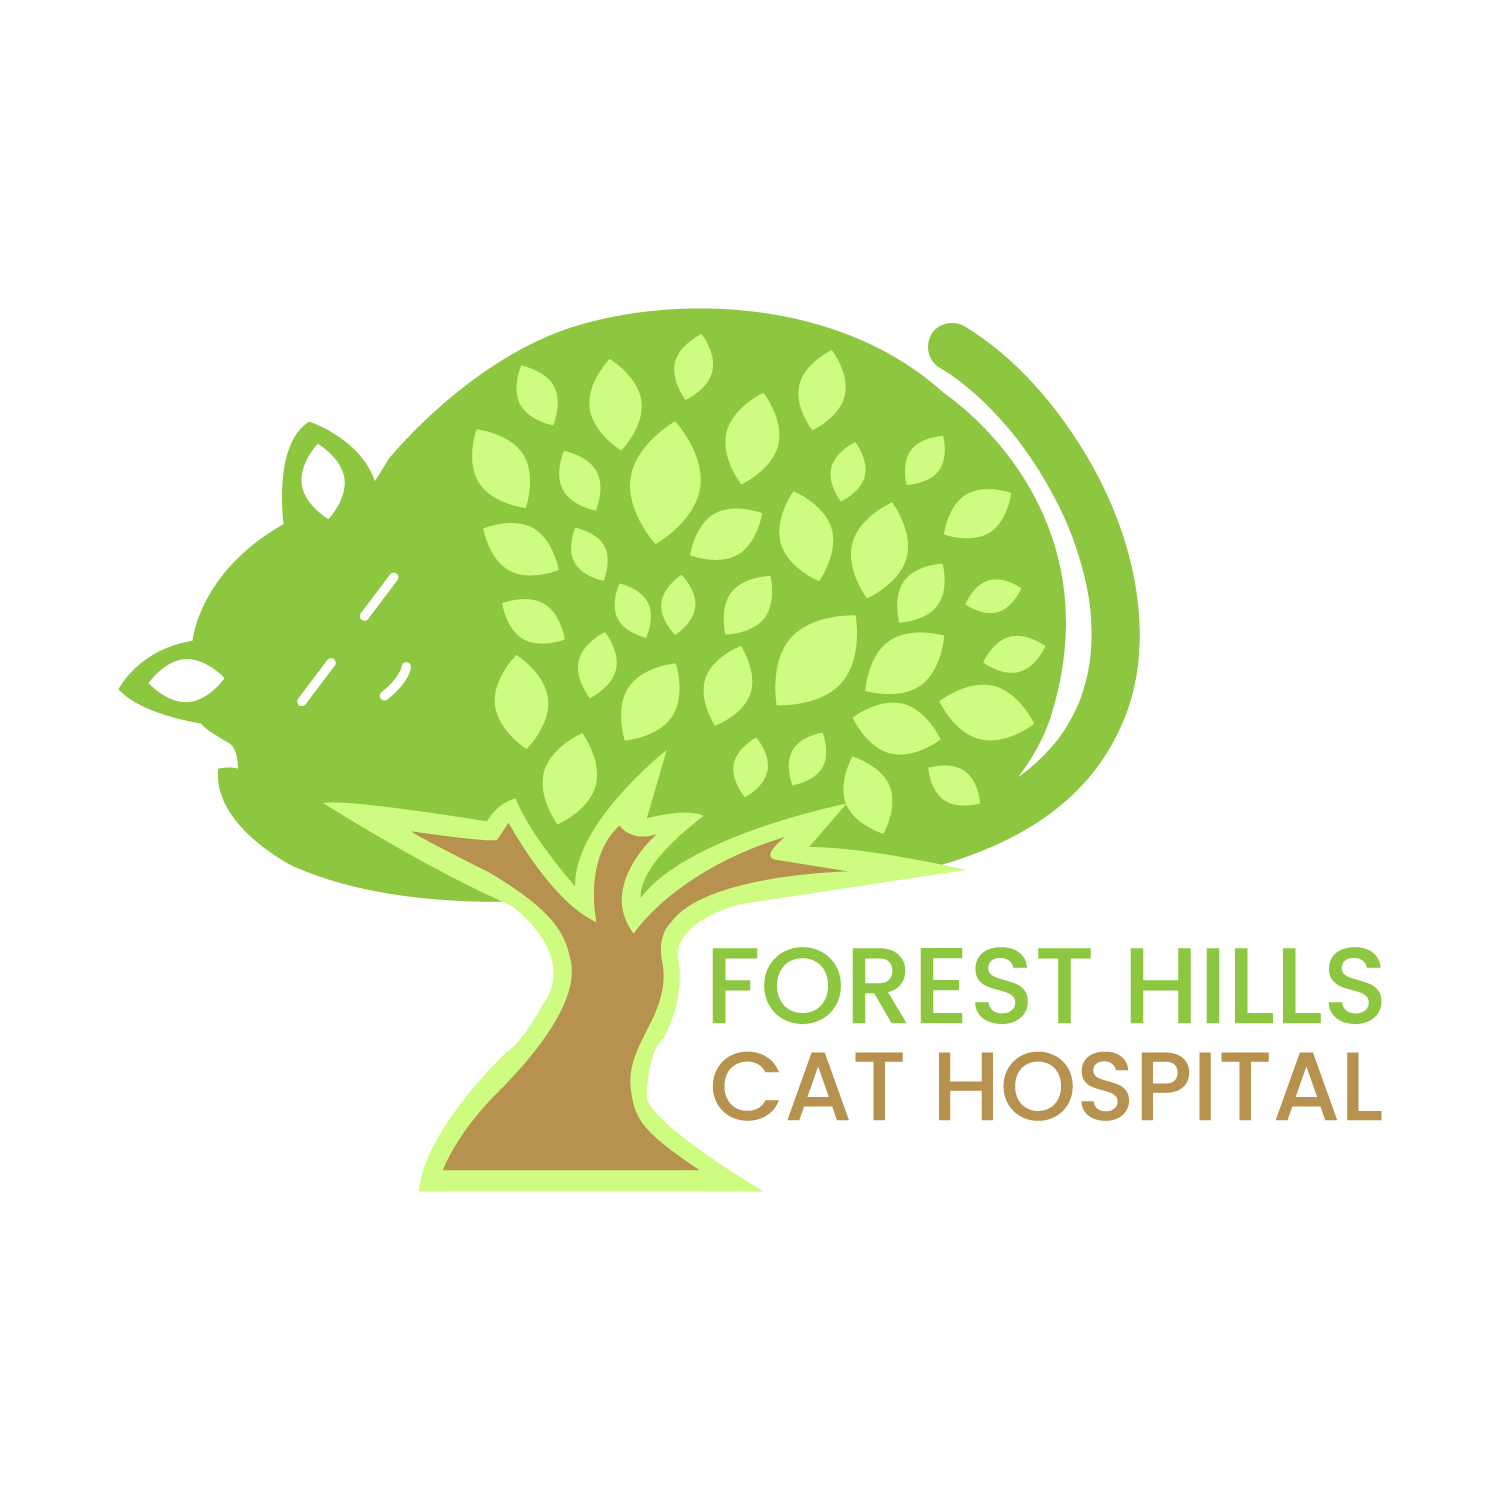 Forest Hills Cat Hospital logo